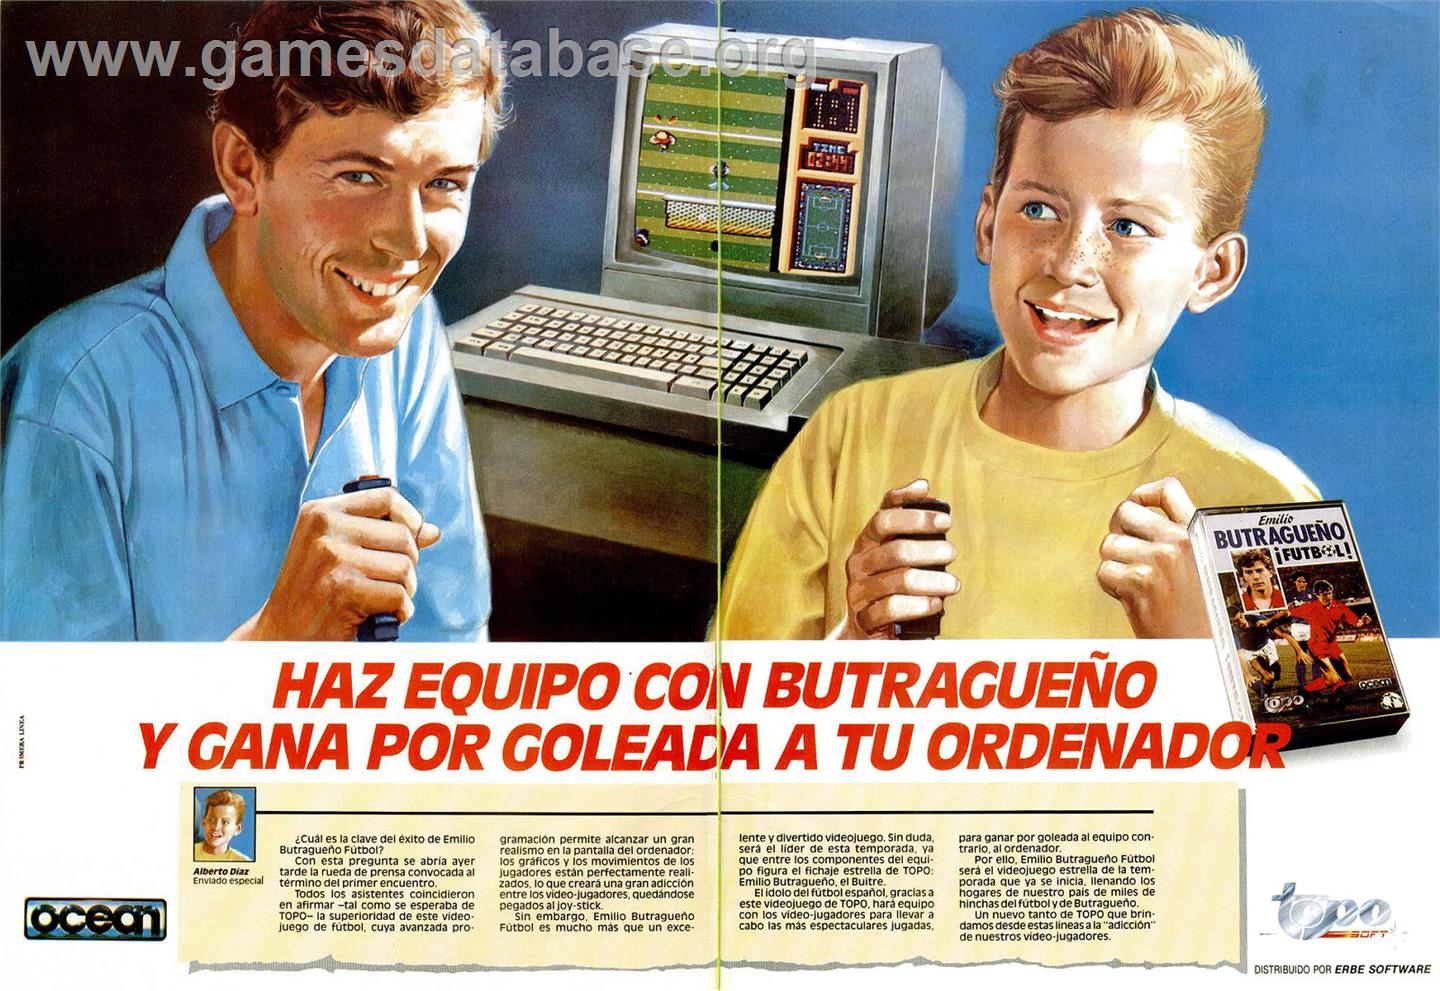 Emilio Butragueño Fútbol - Sinclair ZX Spectrum - Artwork - Advert